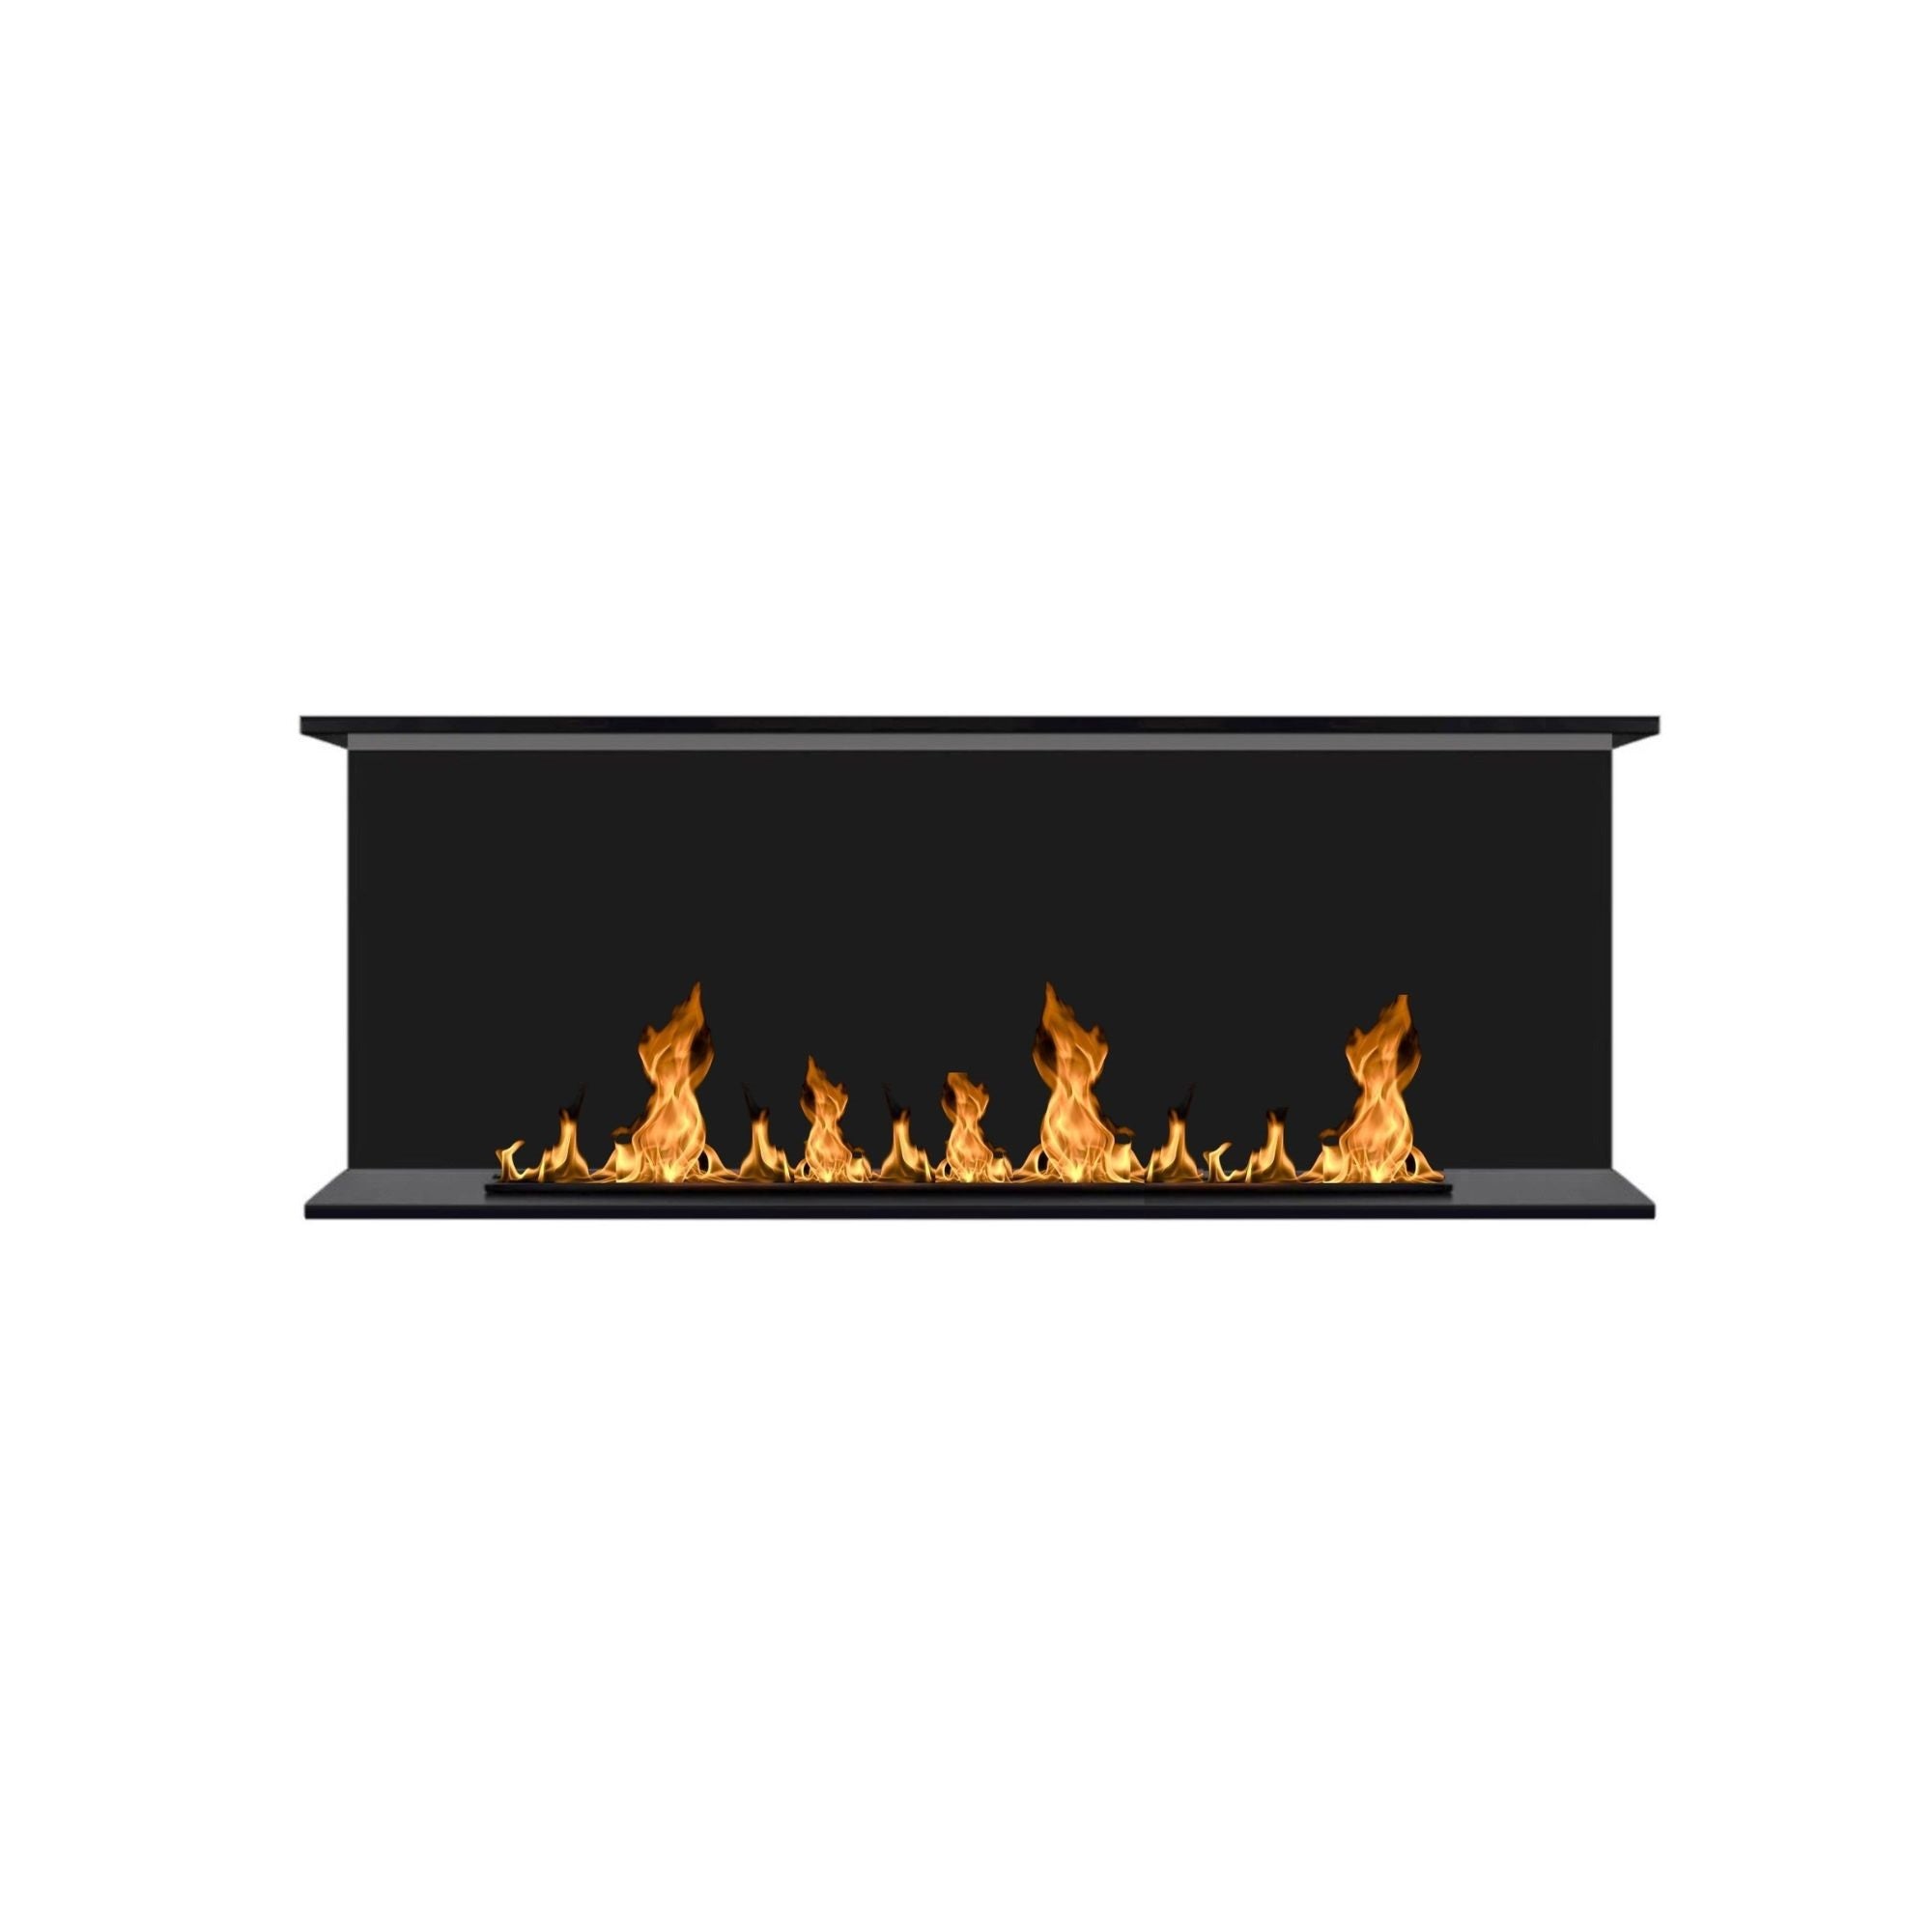 Izala Design Built-in Fireplace 110 CM